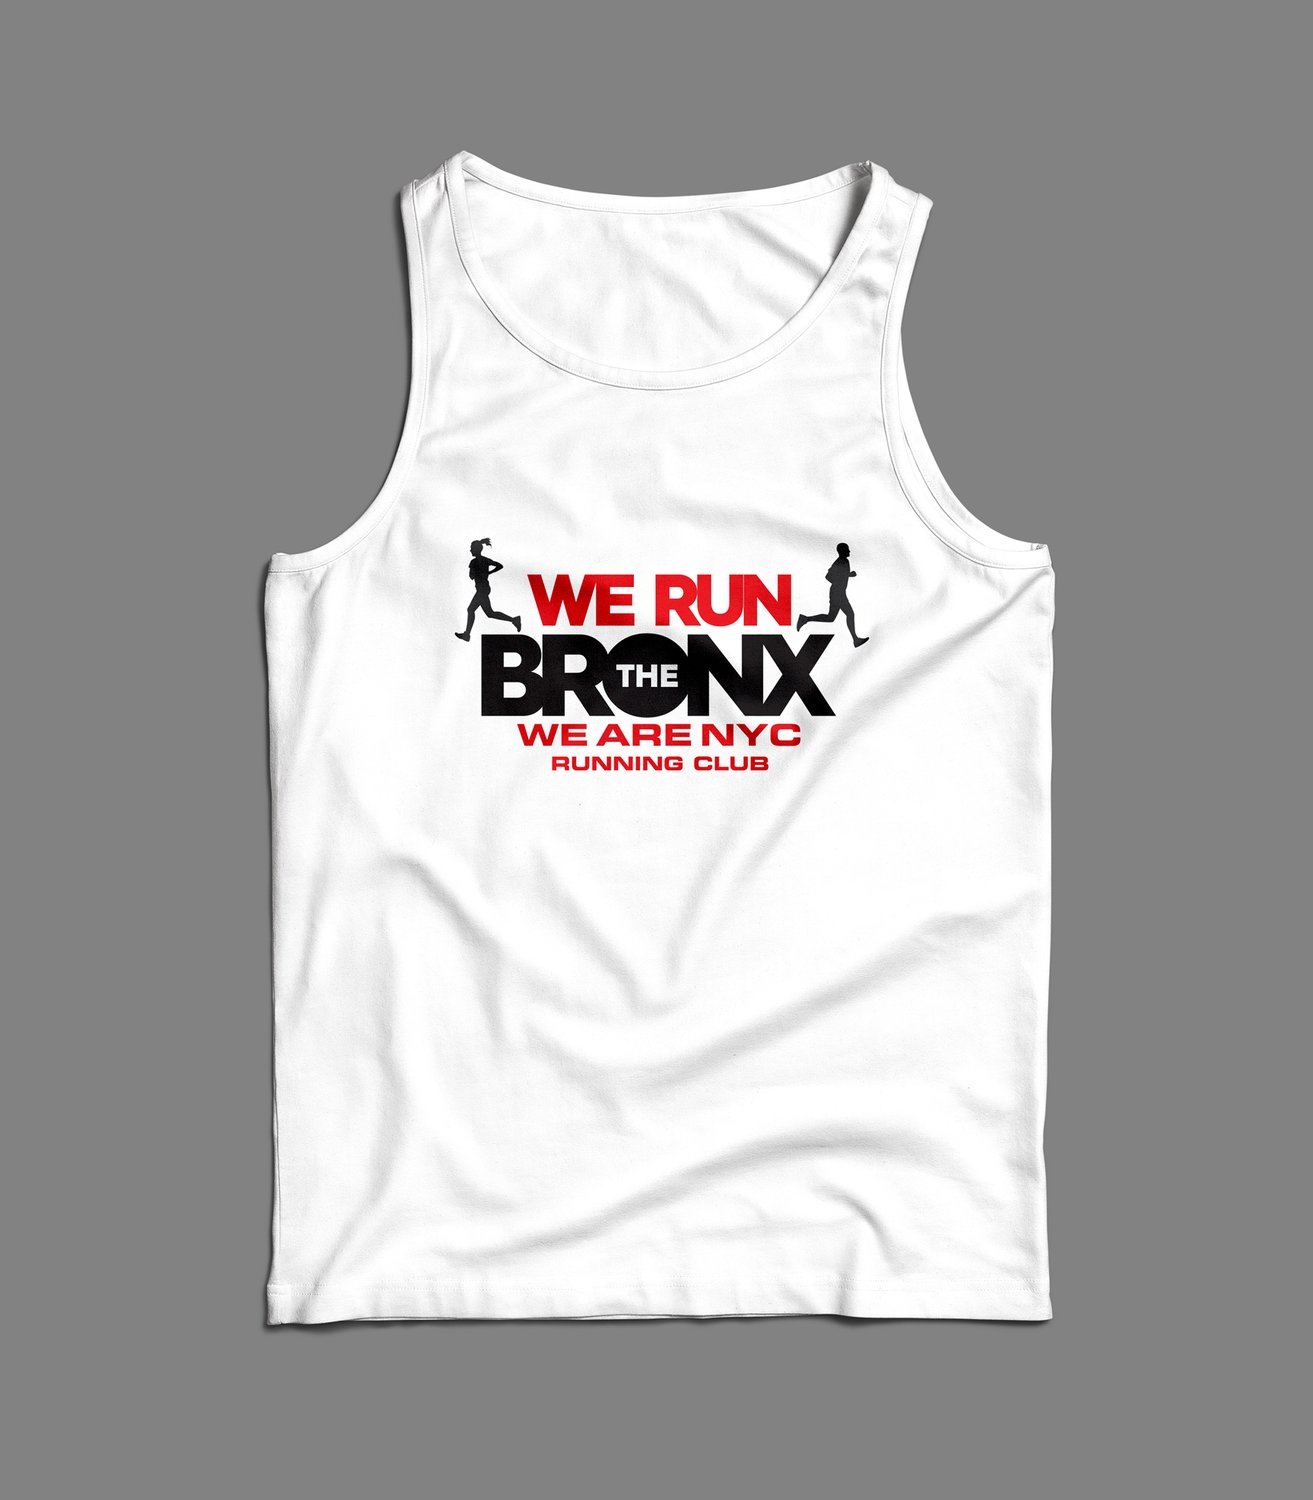 WE ARE NYC "WE RUN THE BRONX" TANK/SINGLET